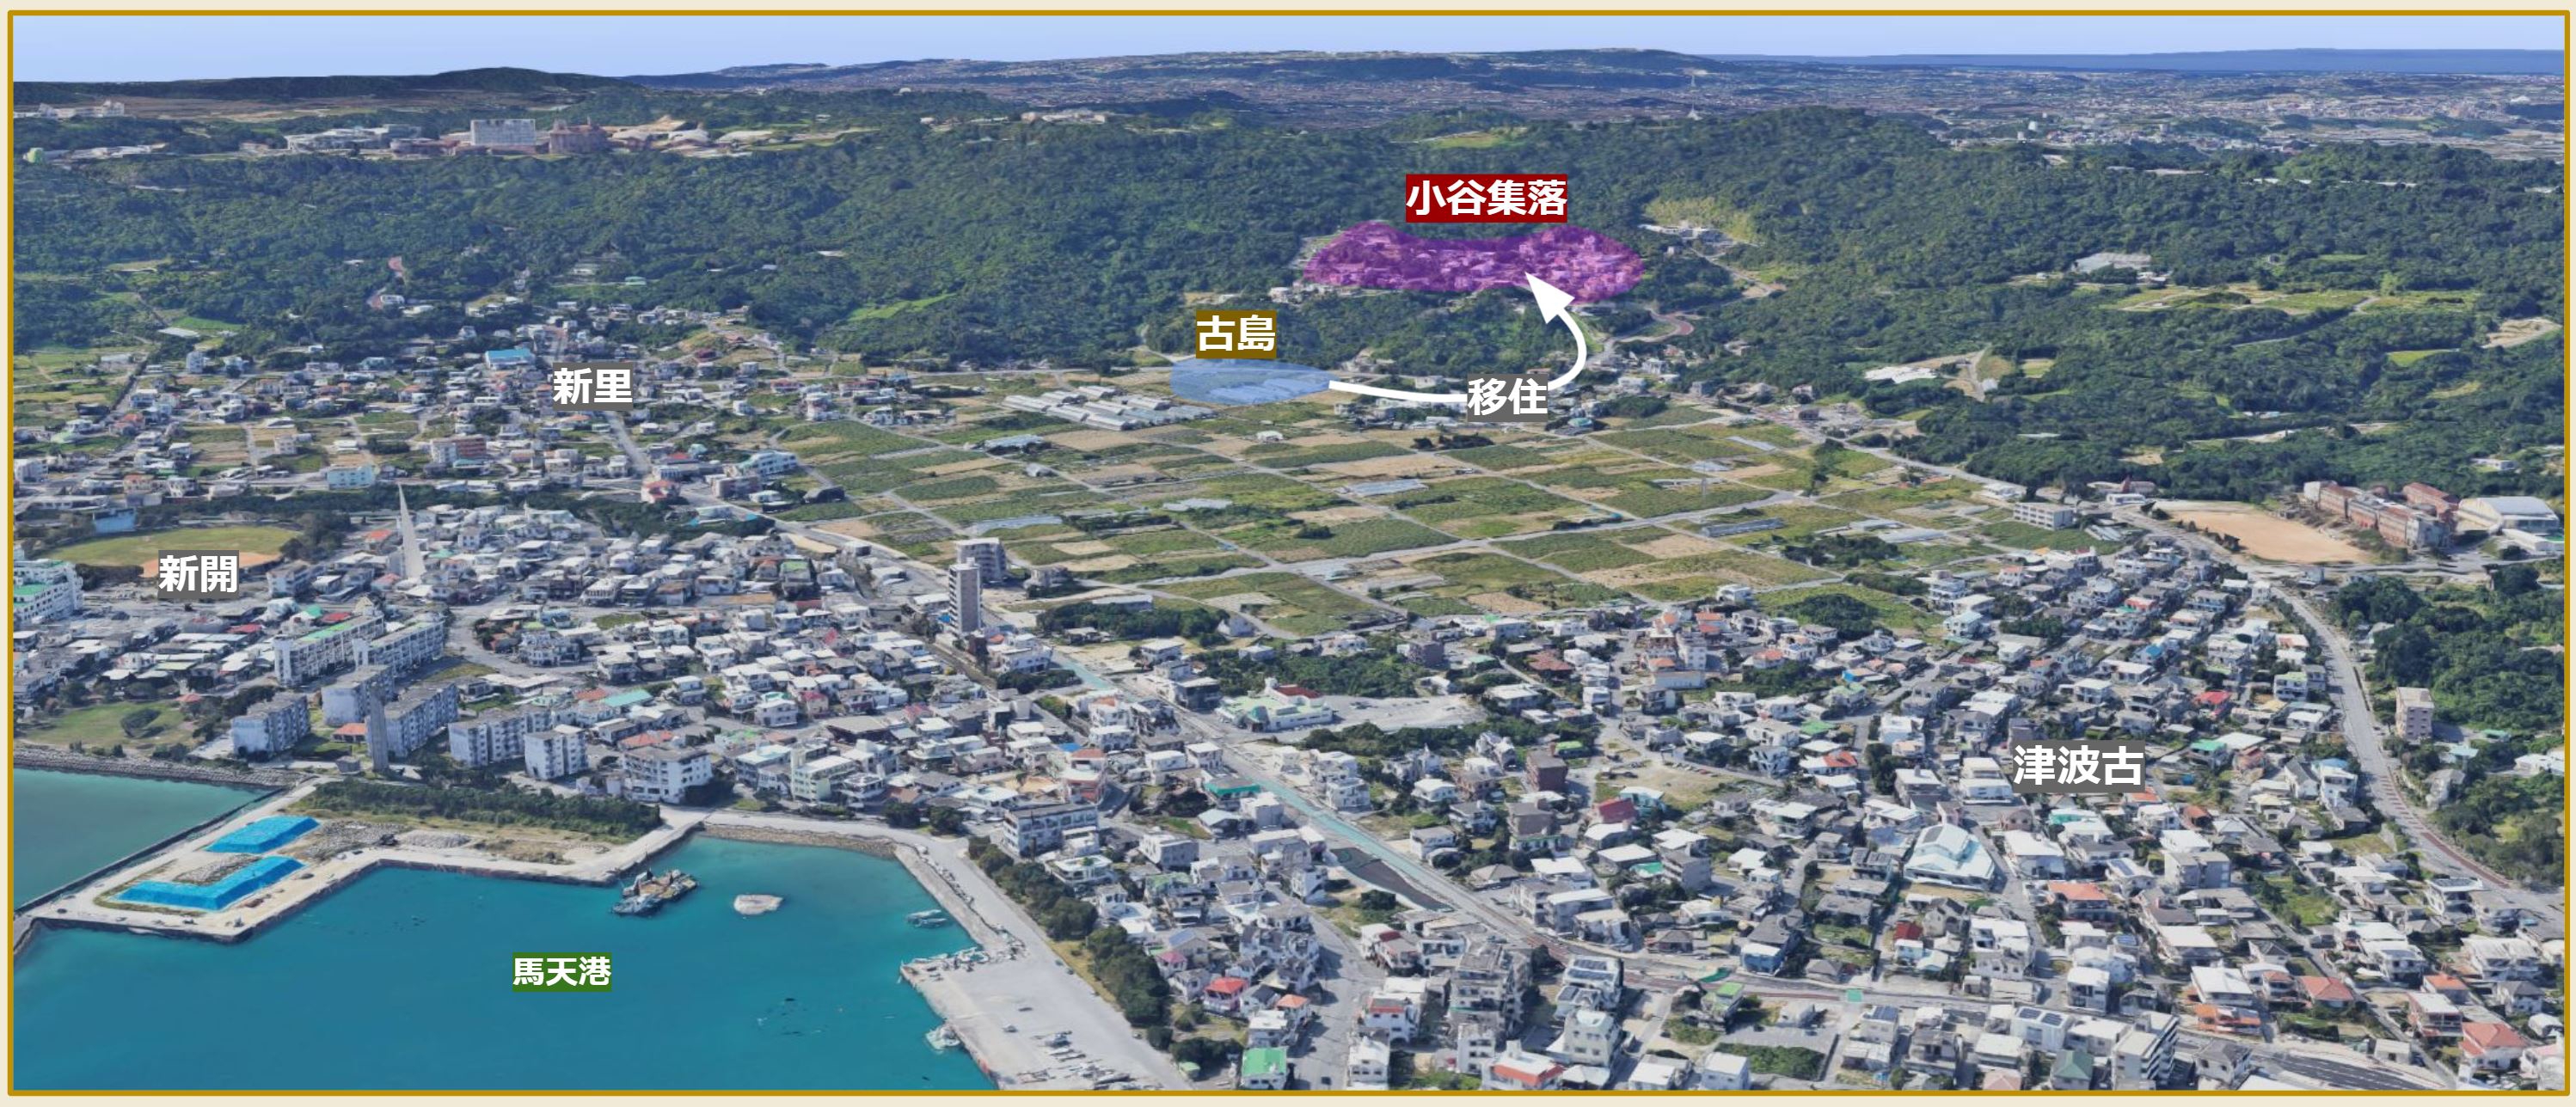 Okinawa 沖縄 #2 Day 142 (05/11/21) 旧佐敷村 (2) Okoku Hamlet 小谷 